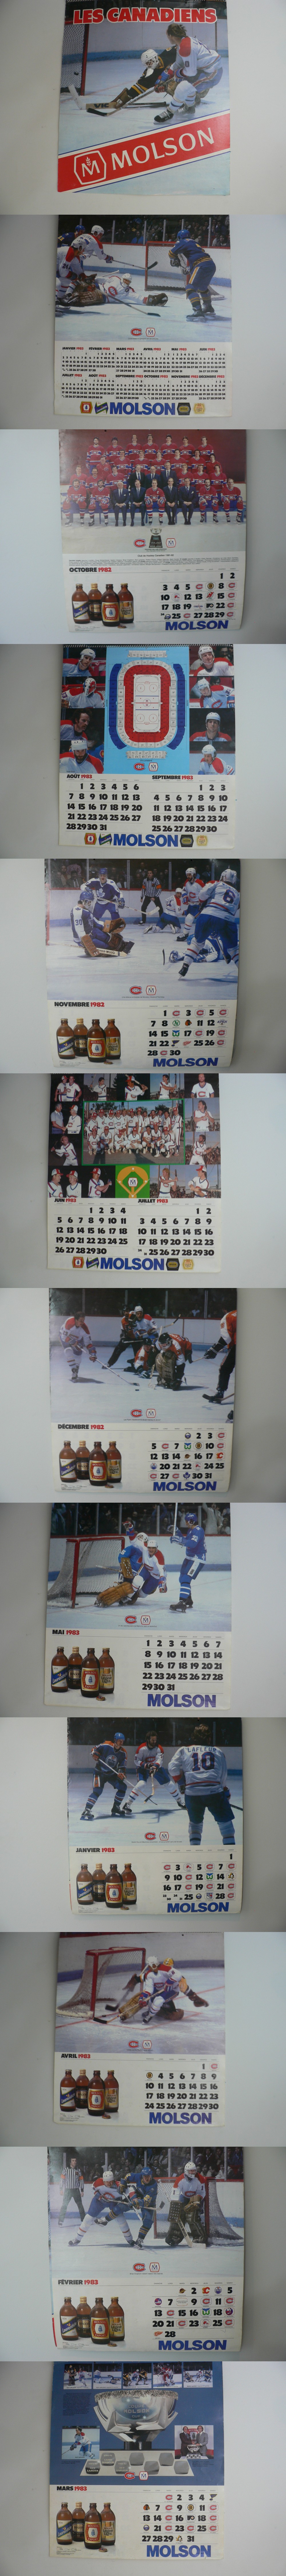 1982-83 MOLSON MONTREAL CANADIENS FULL CALENDAR photo